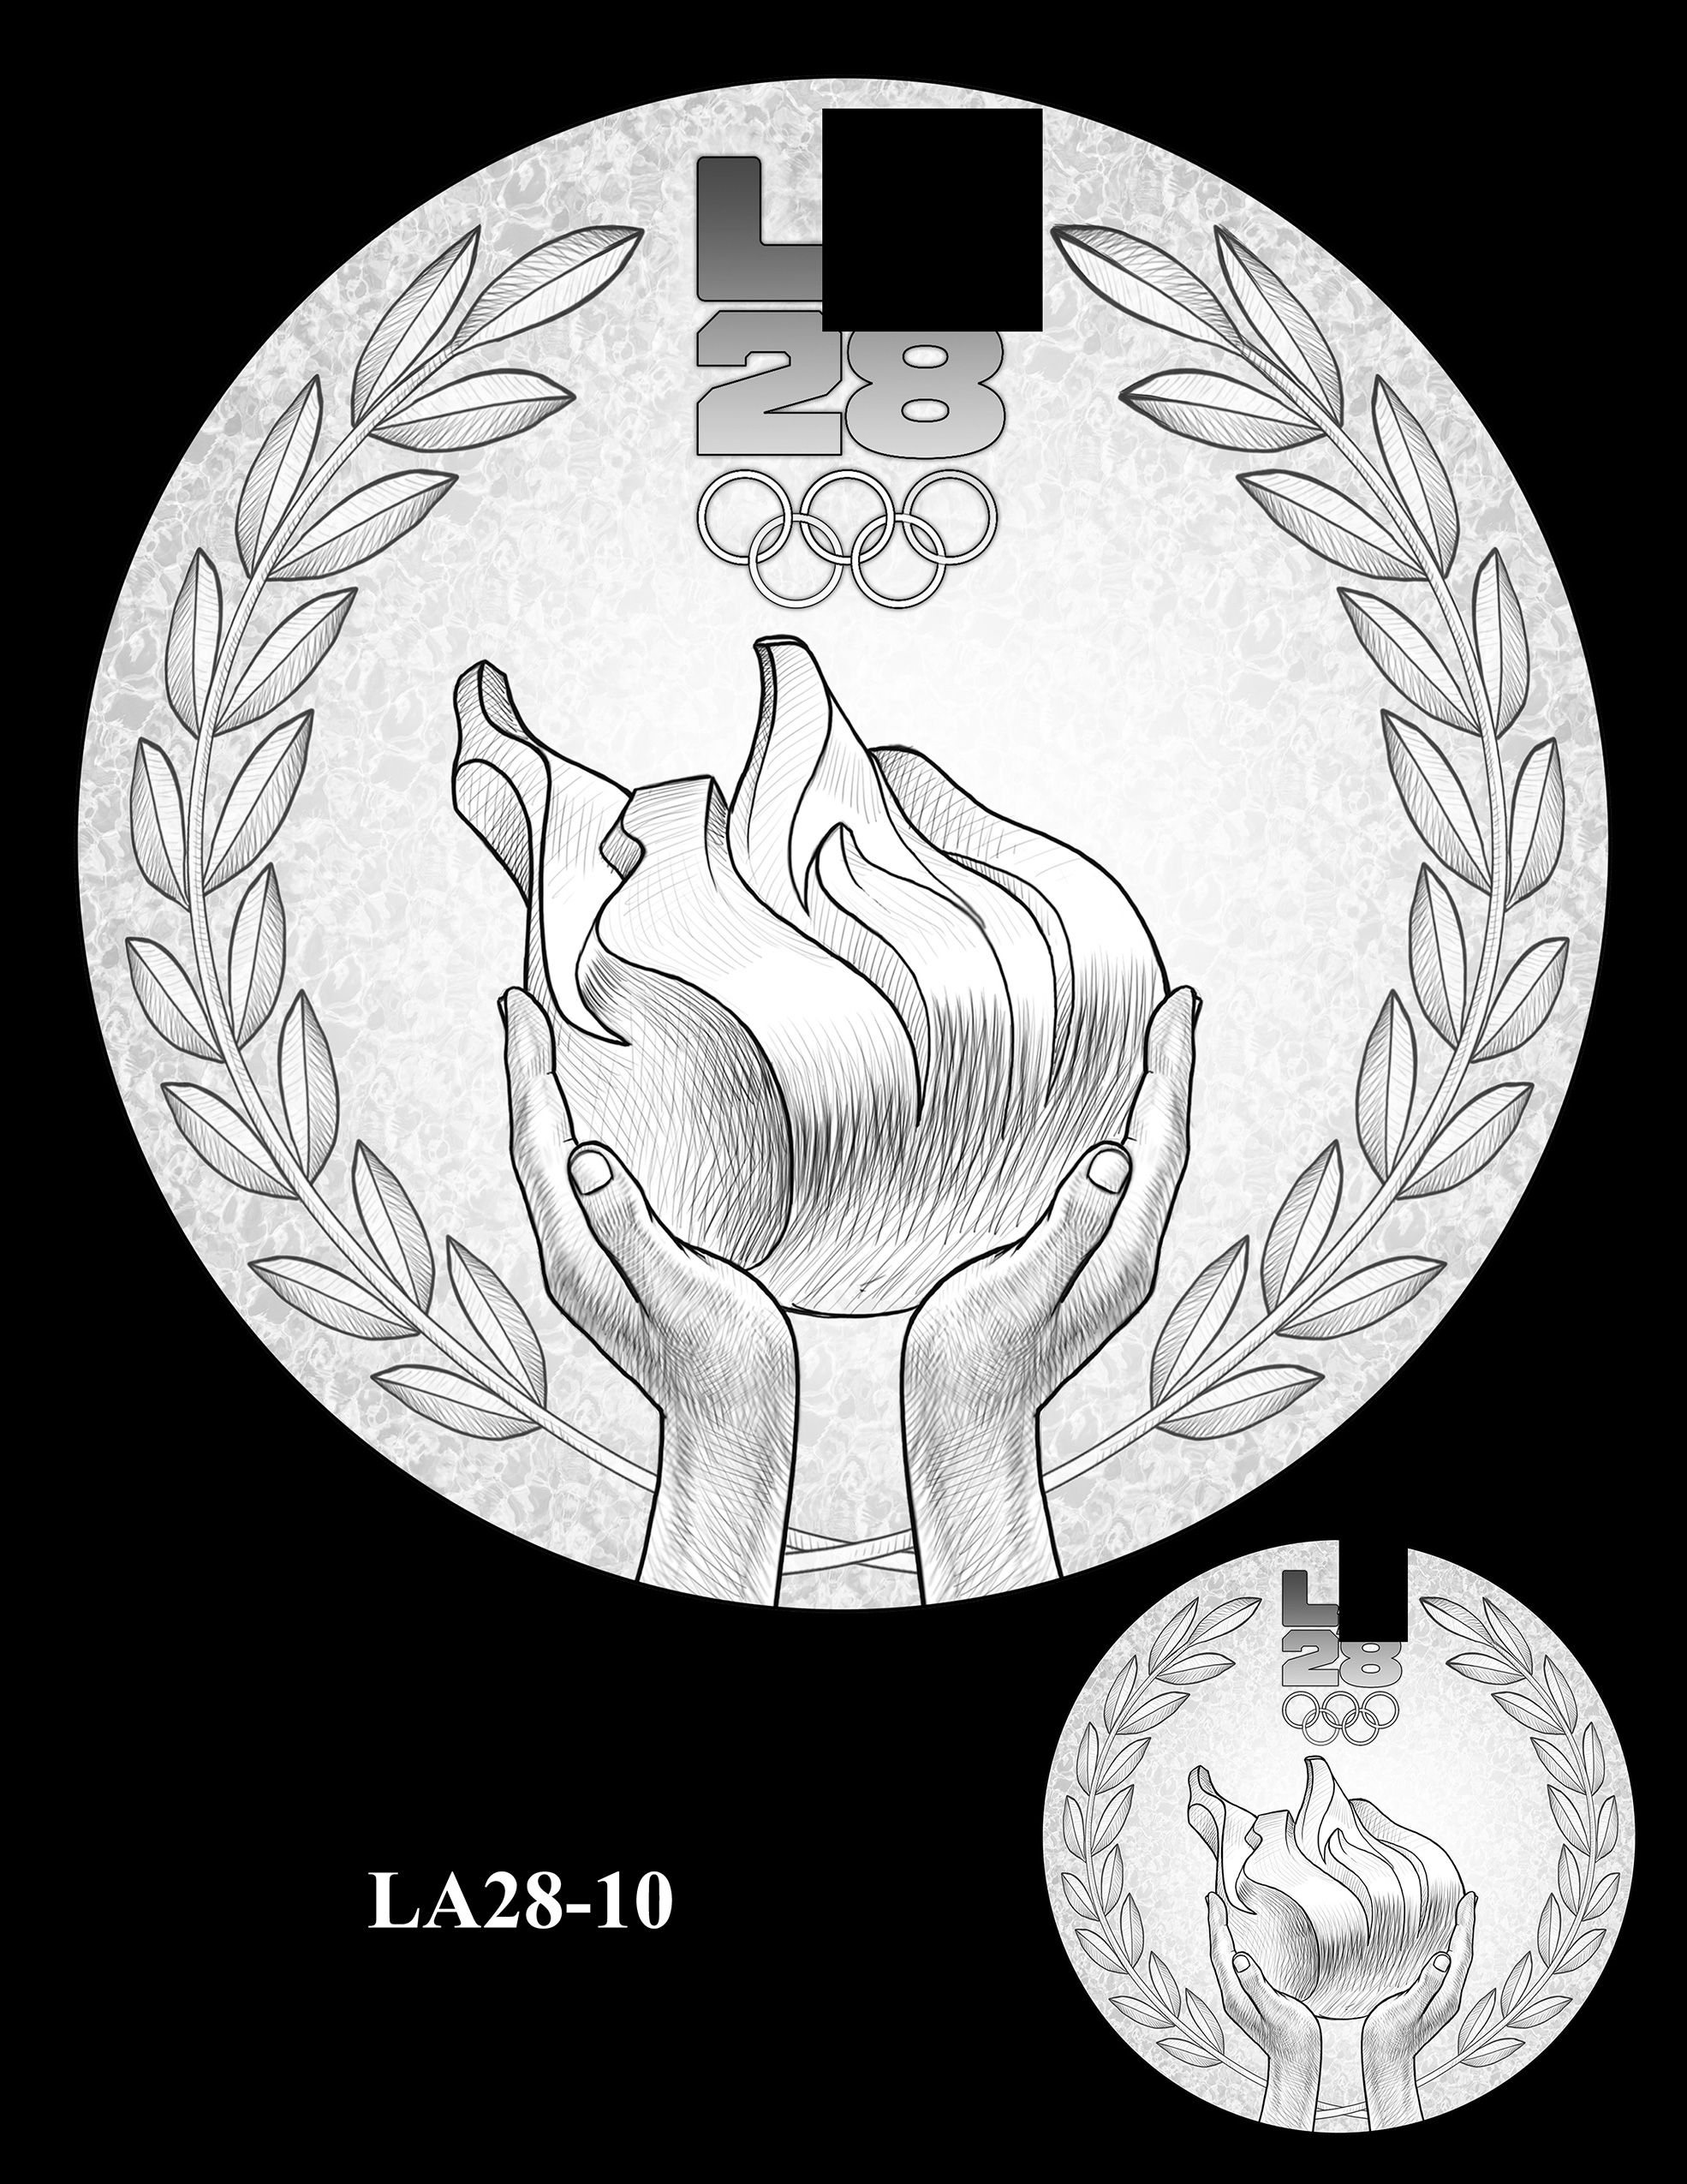 LA28-10 -- Olympics Handover Medallion